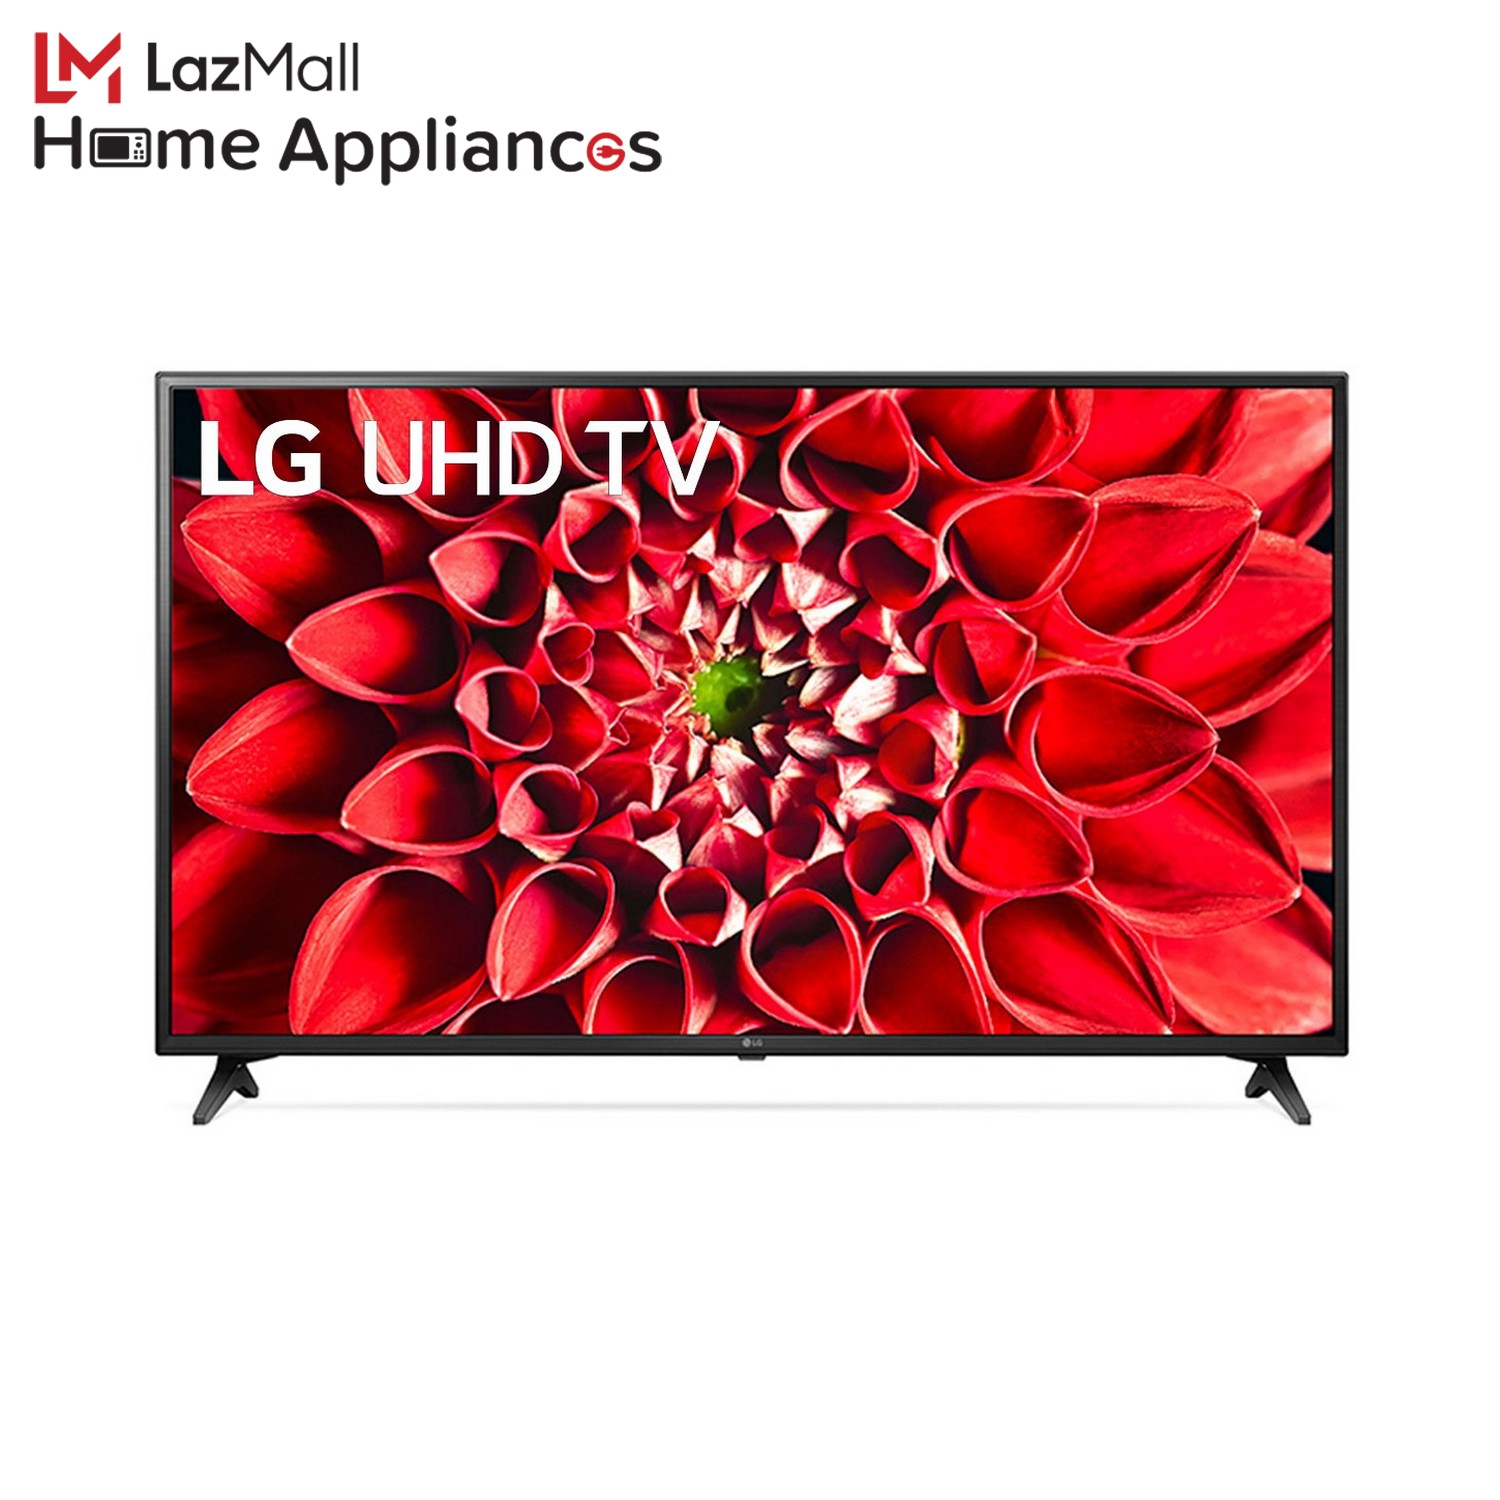 LG 4K Smart TV UHD 60